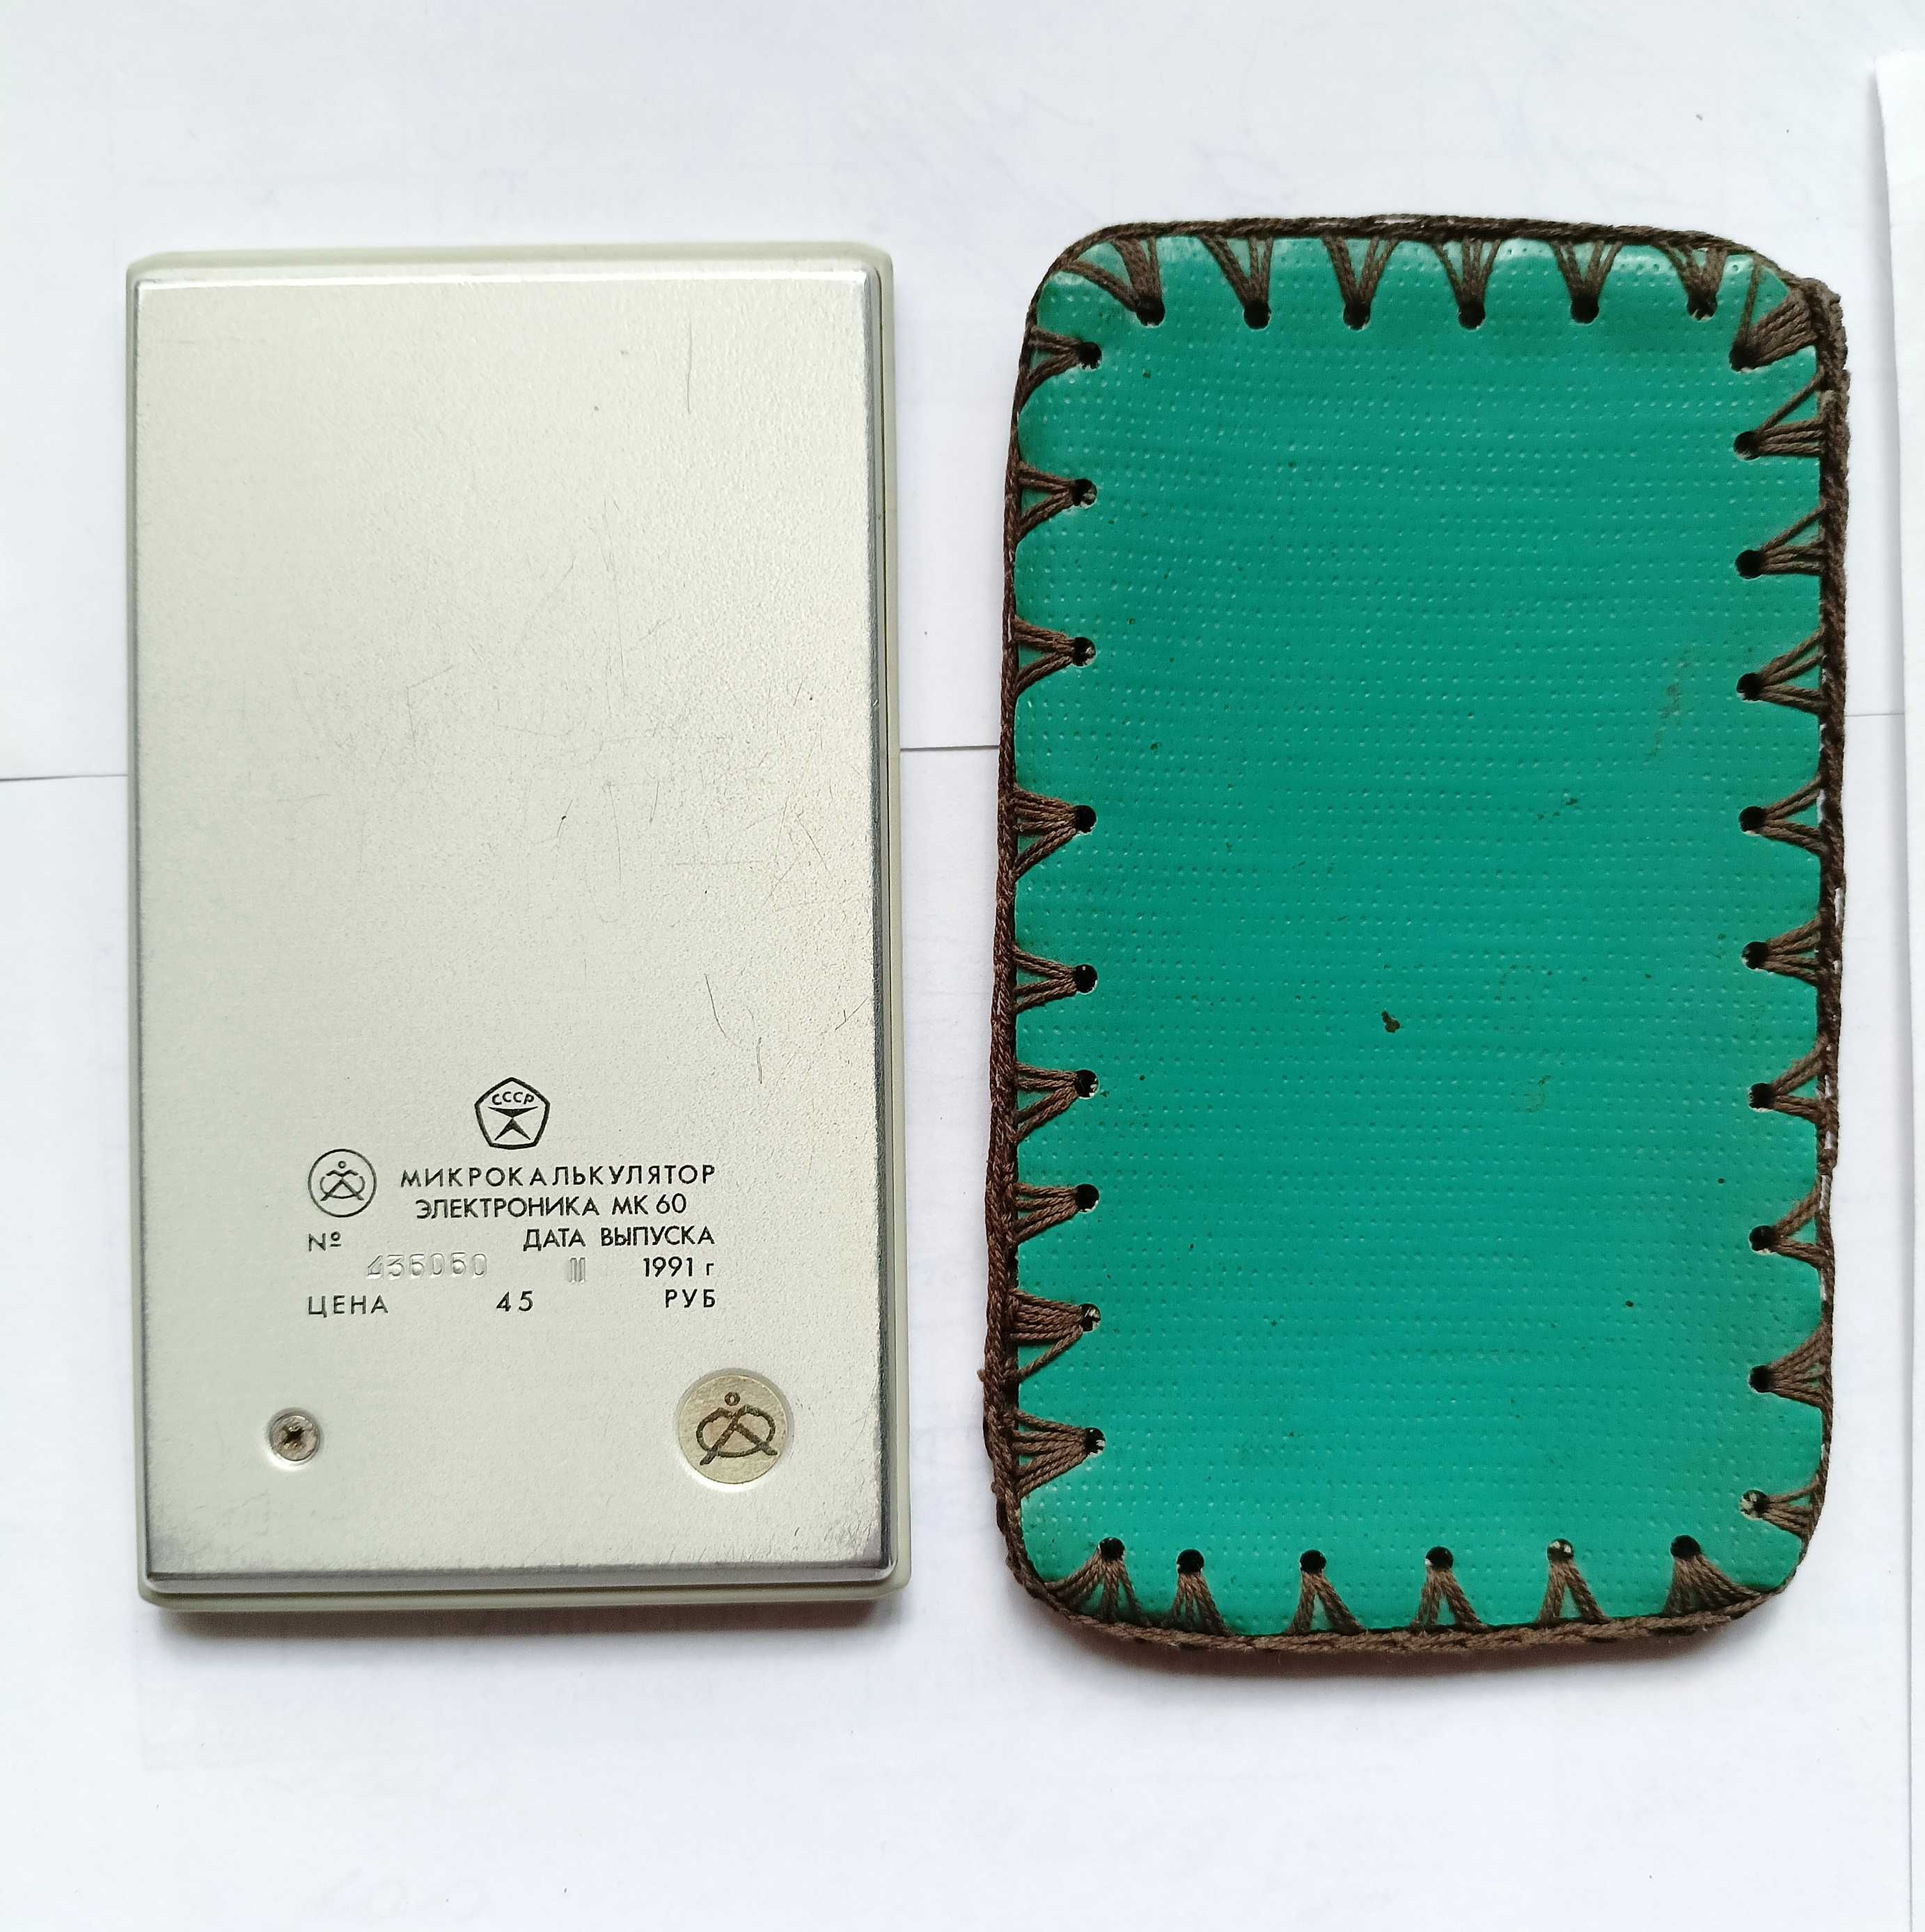 Калькулятор "Электроника МК 60" на сонячній батареї